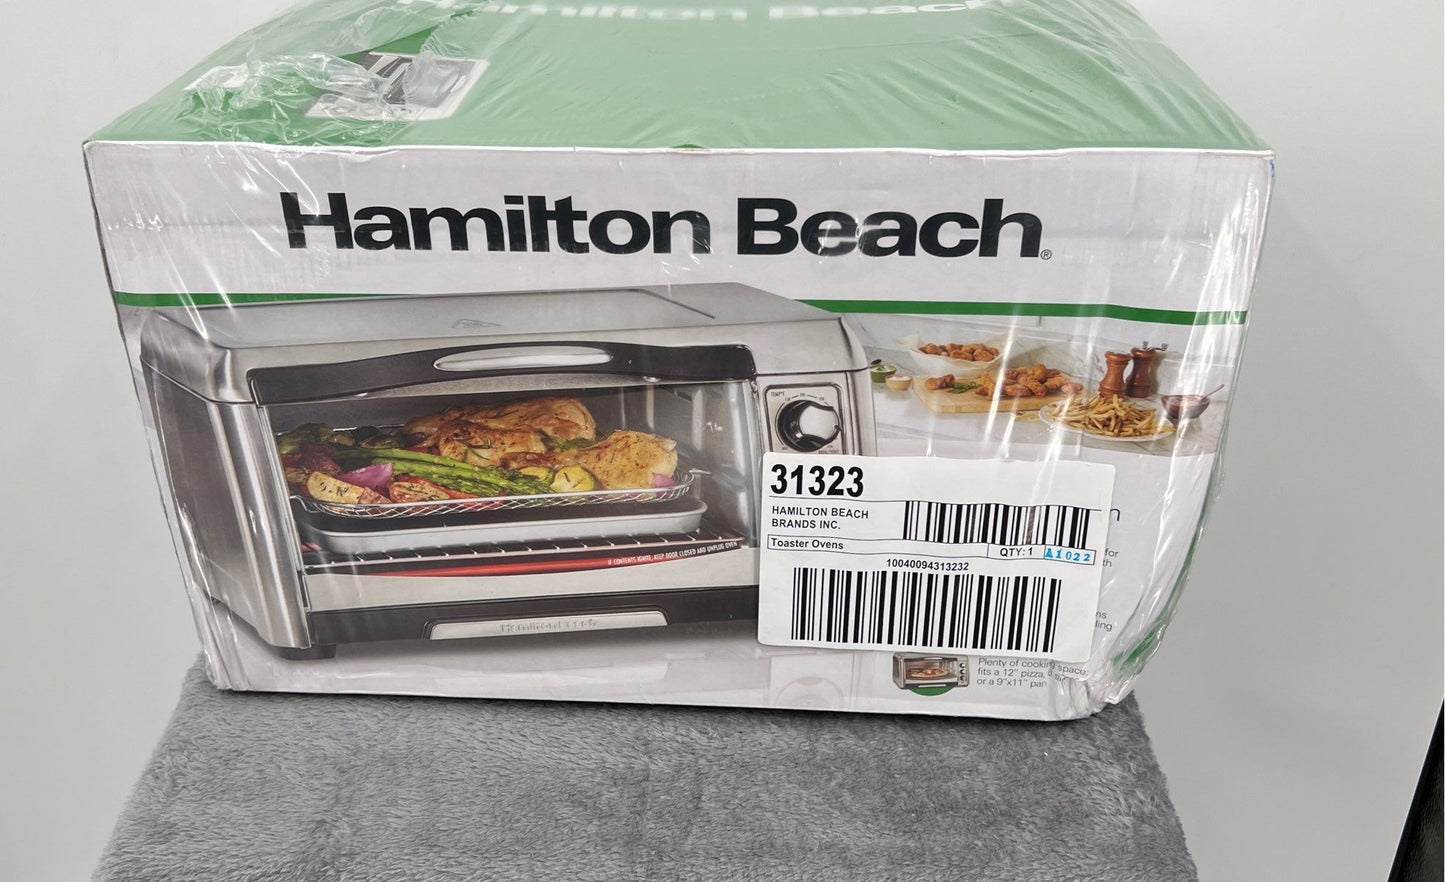 New Hamilton Beach Sure-Crisp Air Fryer-Toaster Oven-6 Slice Capacity #31323